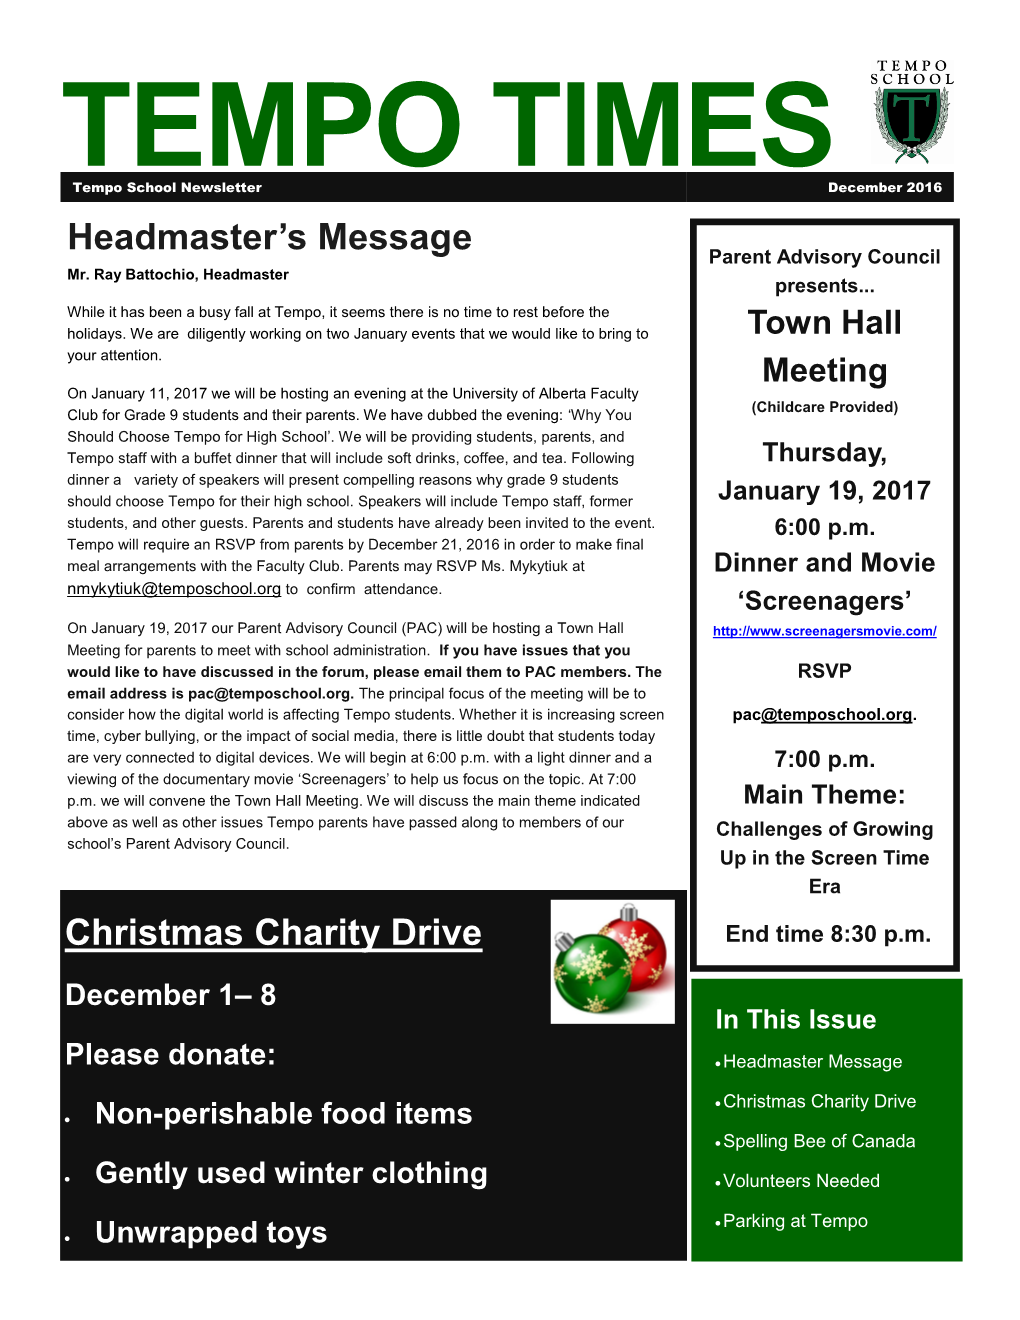 Headmaster's Message Christmas Charity Drive